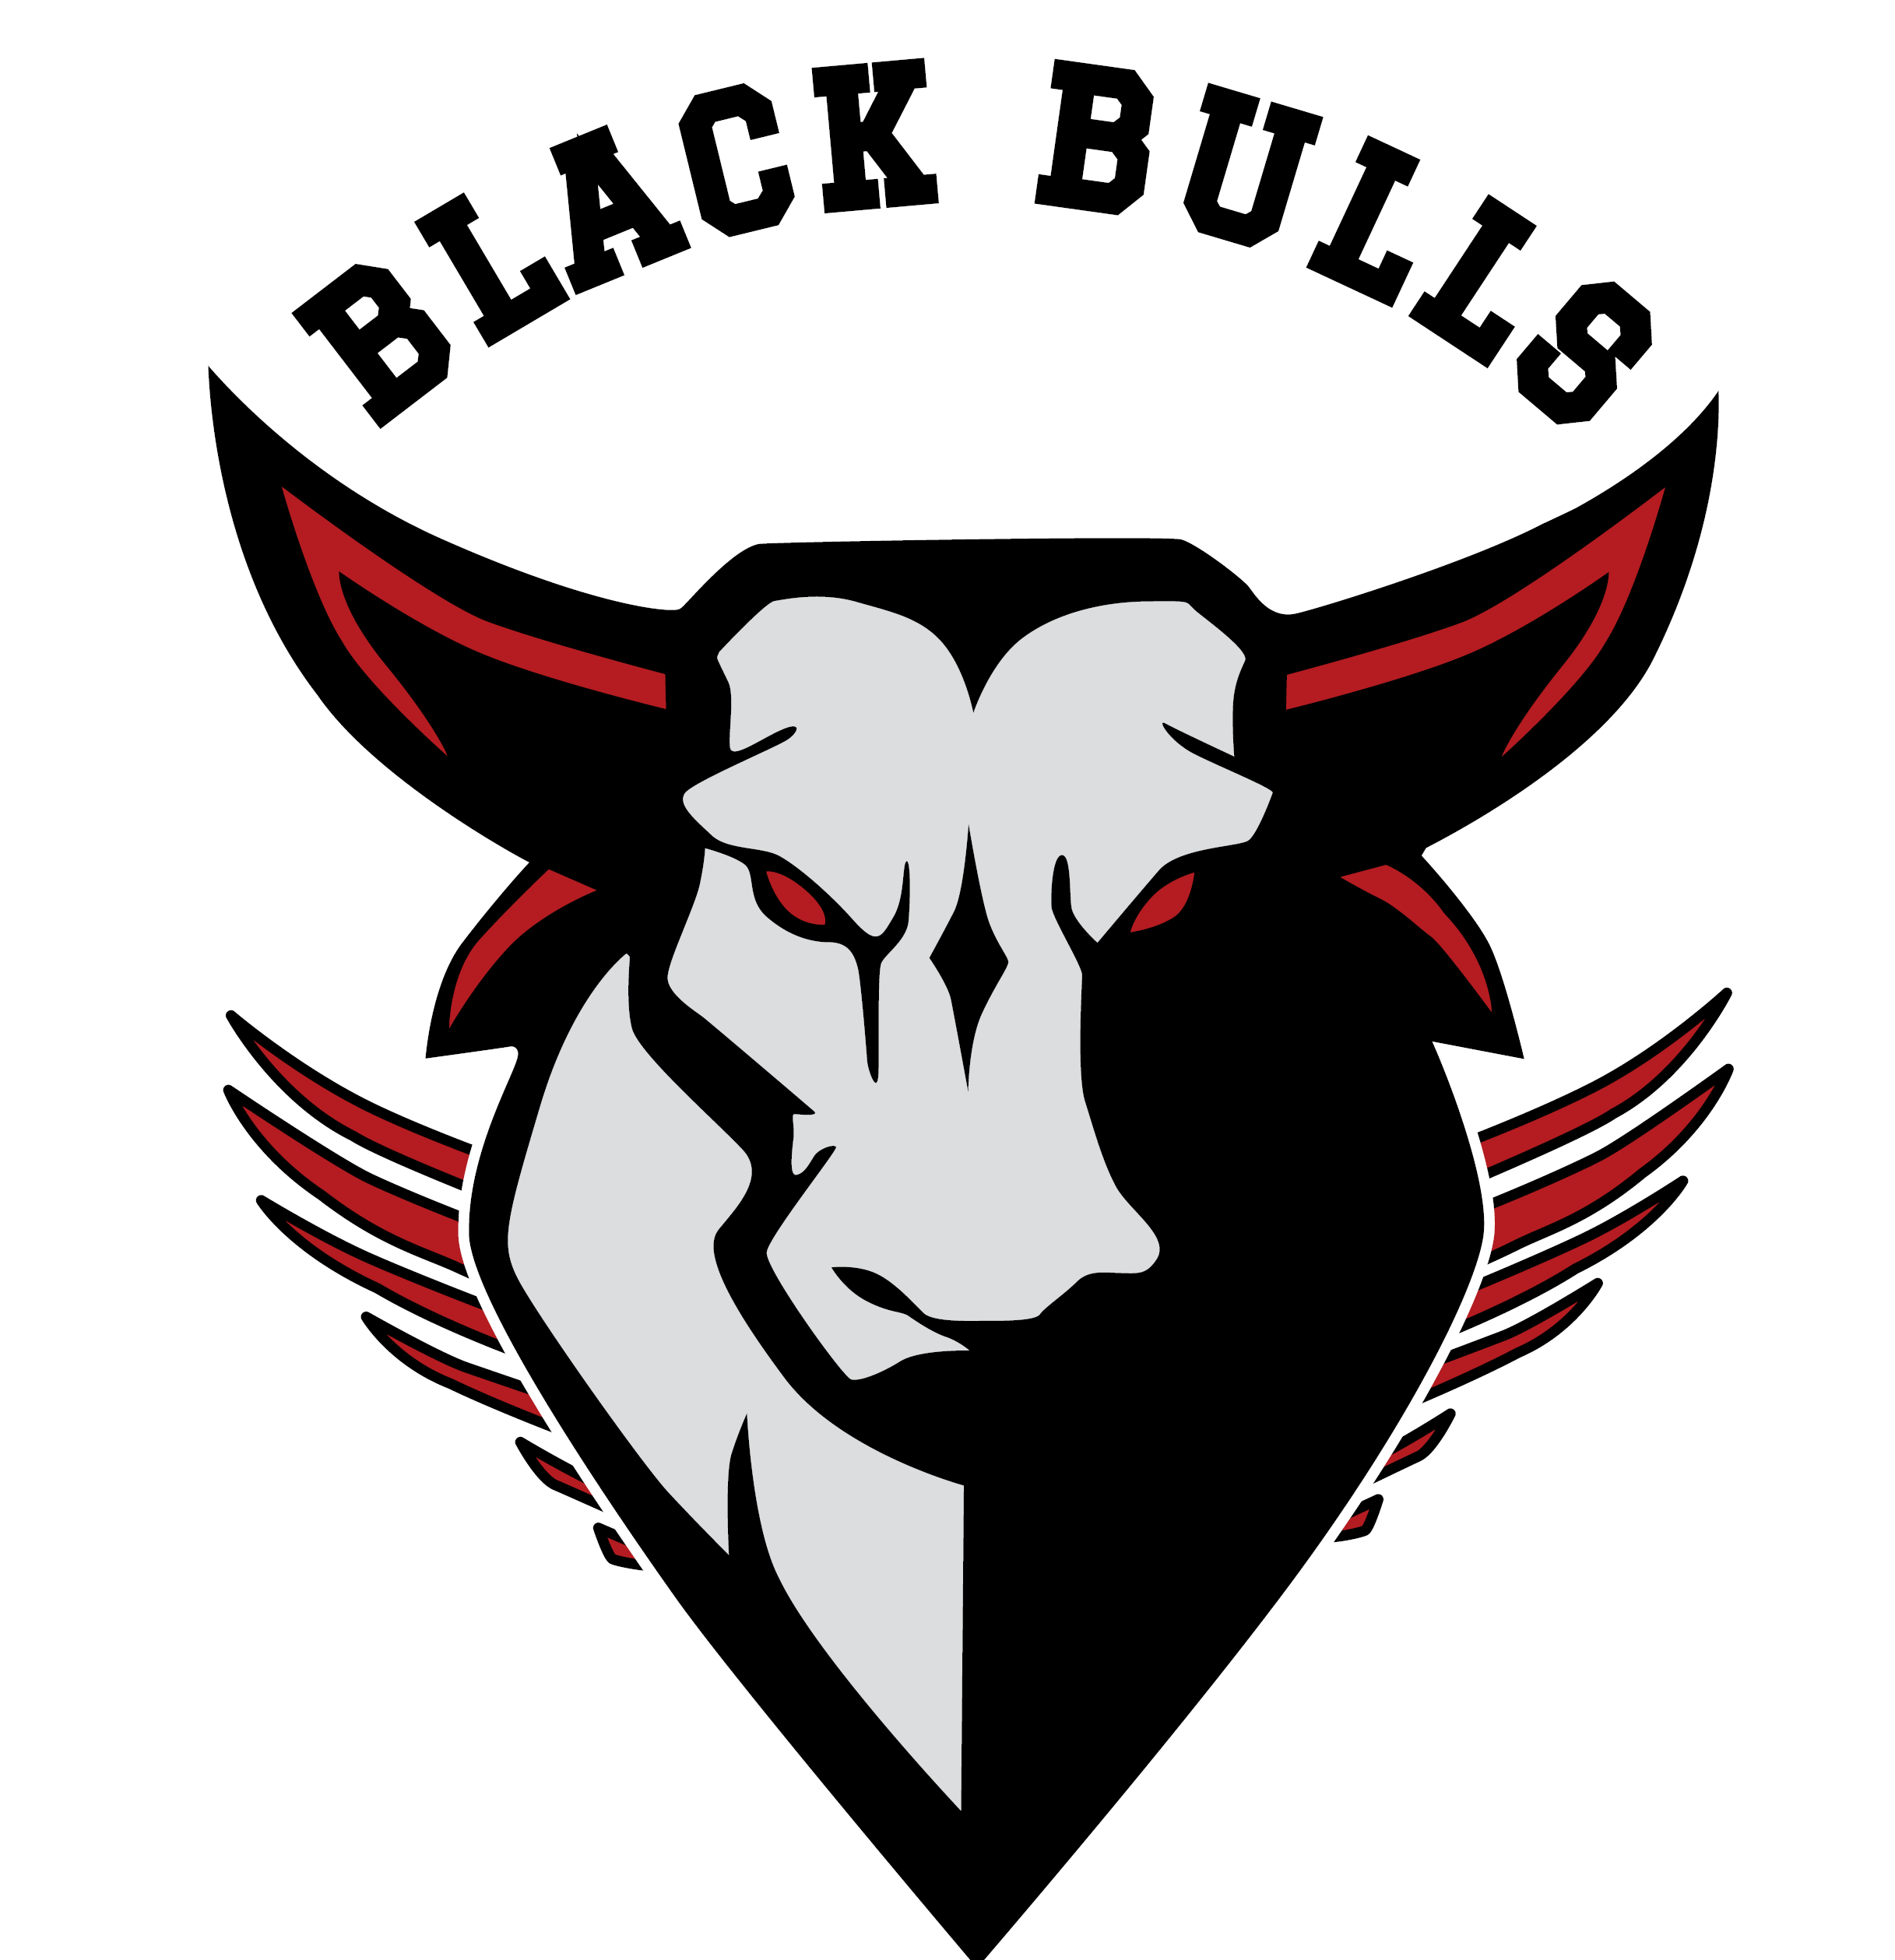 BLACK BULLS